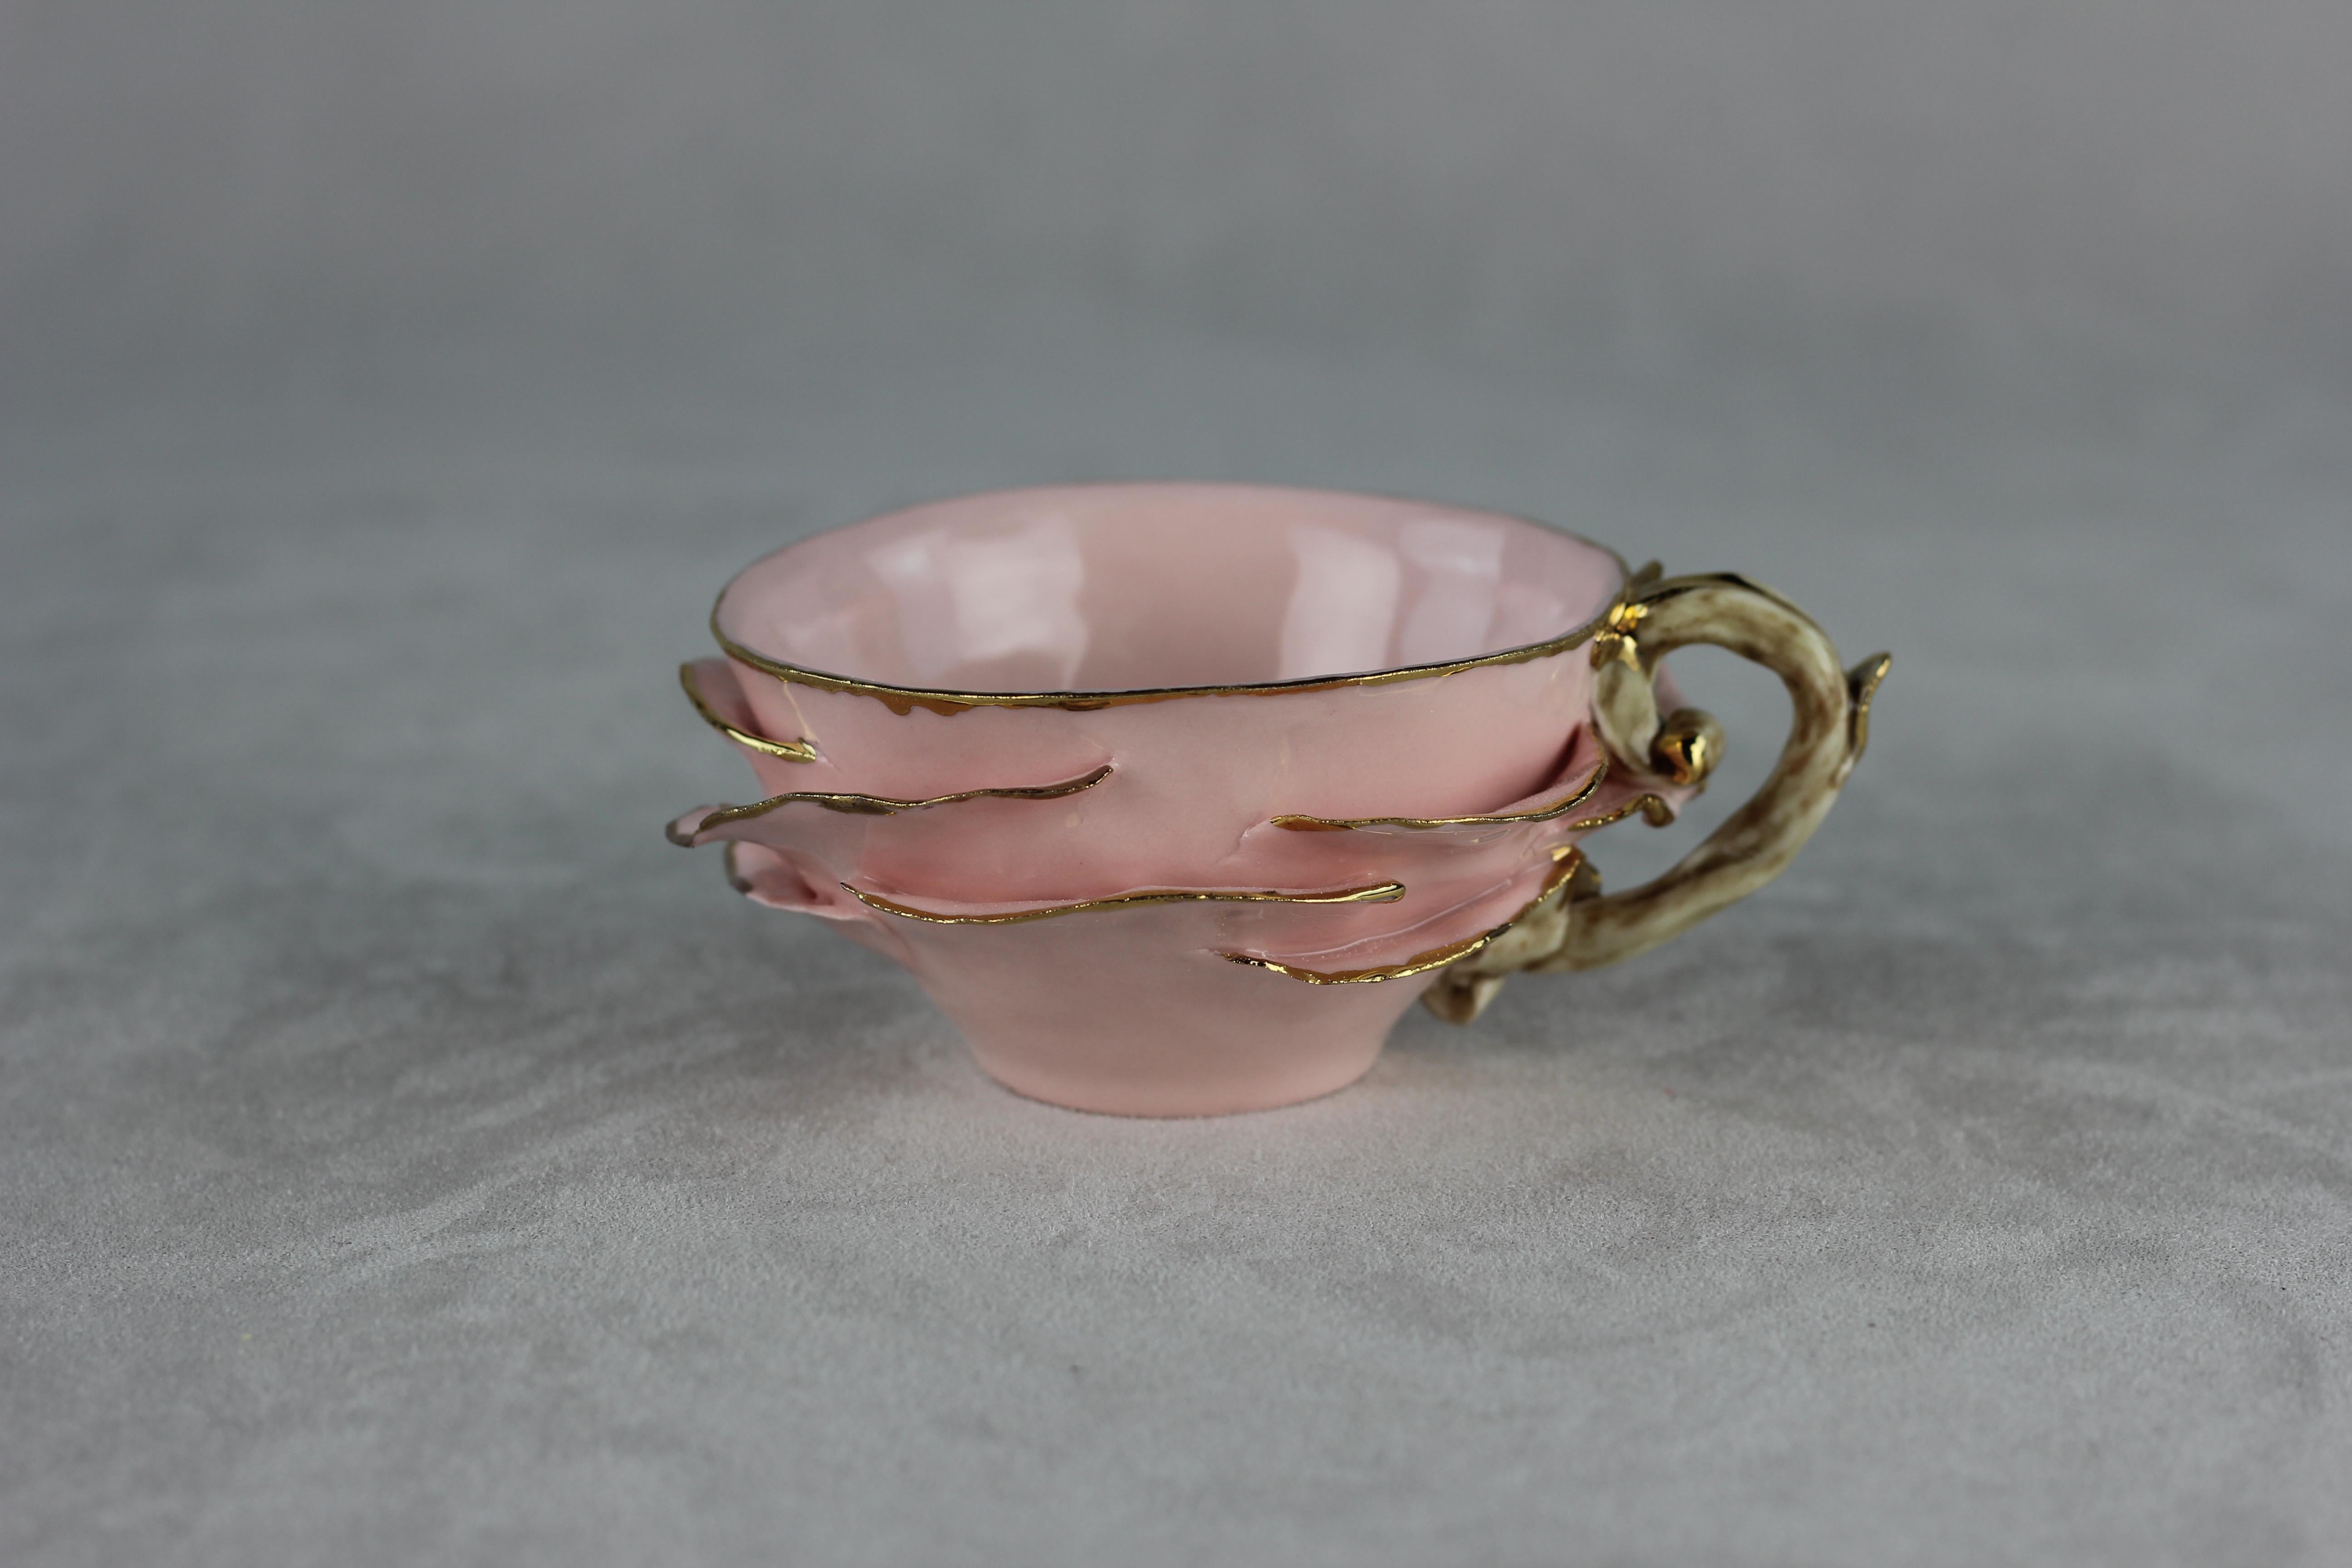 Italian Cinderella Tea Service, Pink & Gold, Handmade in Italy, Luxury Gold Design, 2021 For Sale